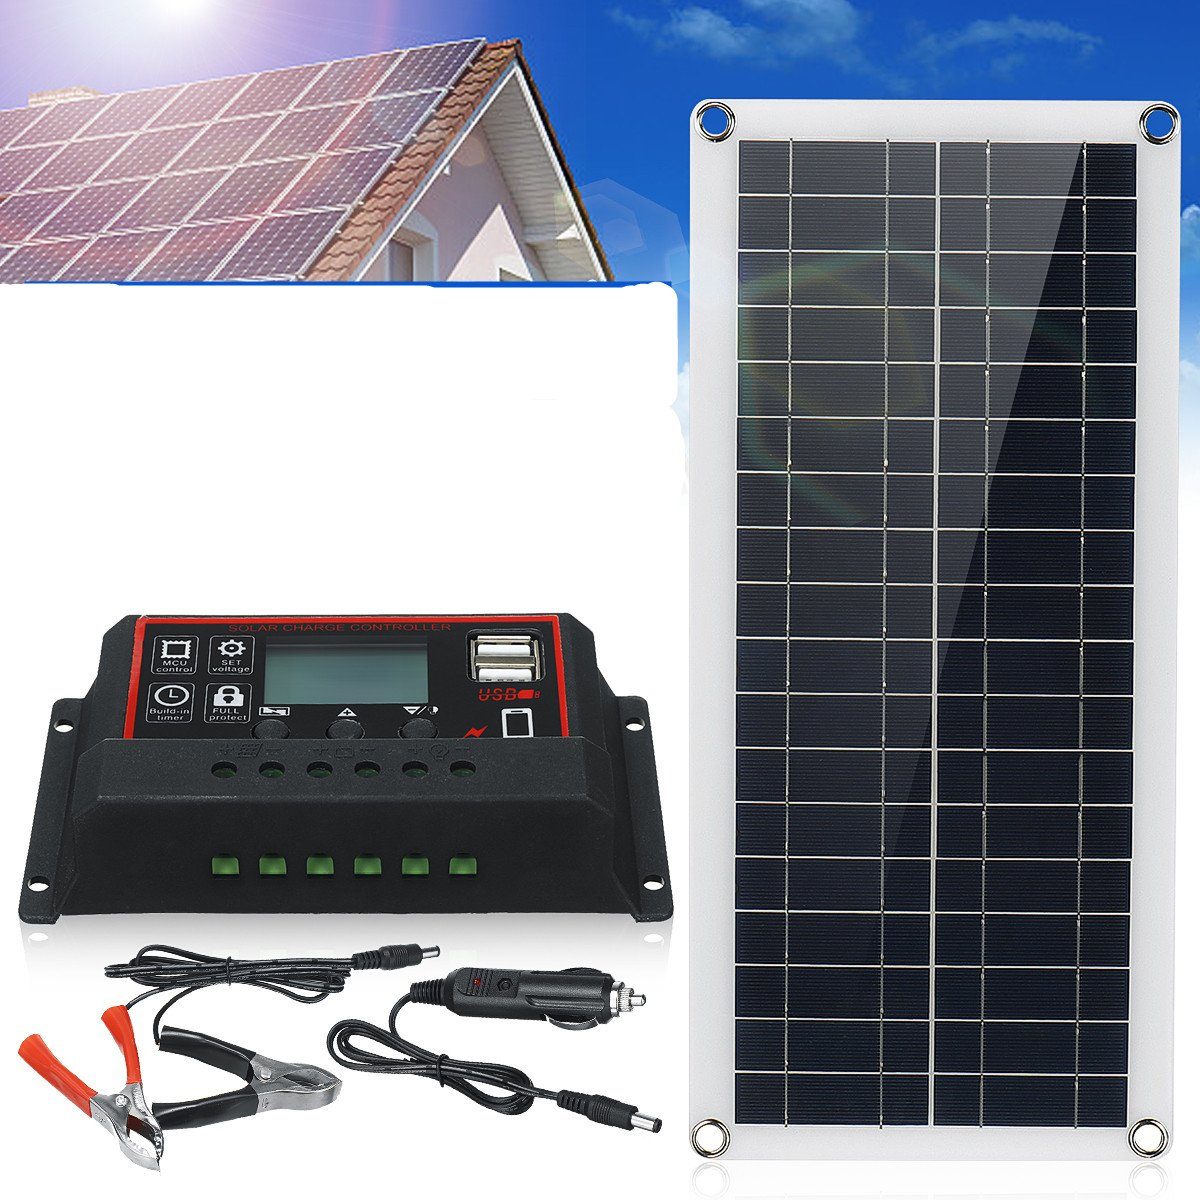 DE 20W 12V Solarzelle Solarpanel Solarmodul Ladegerät USB für Auto Boot Caravan 